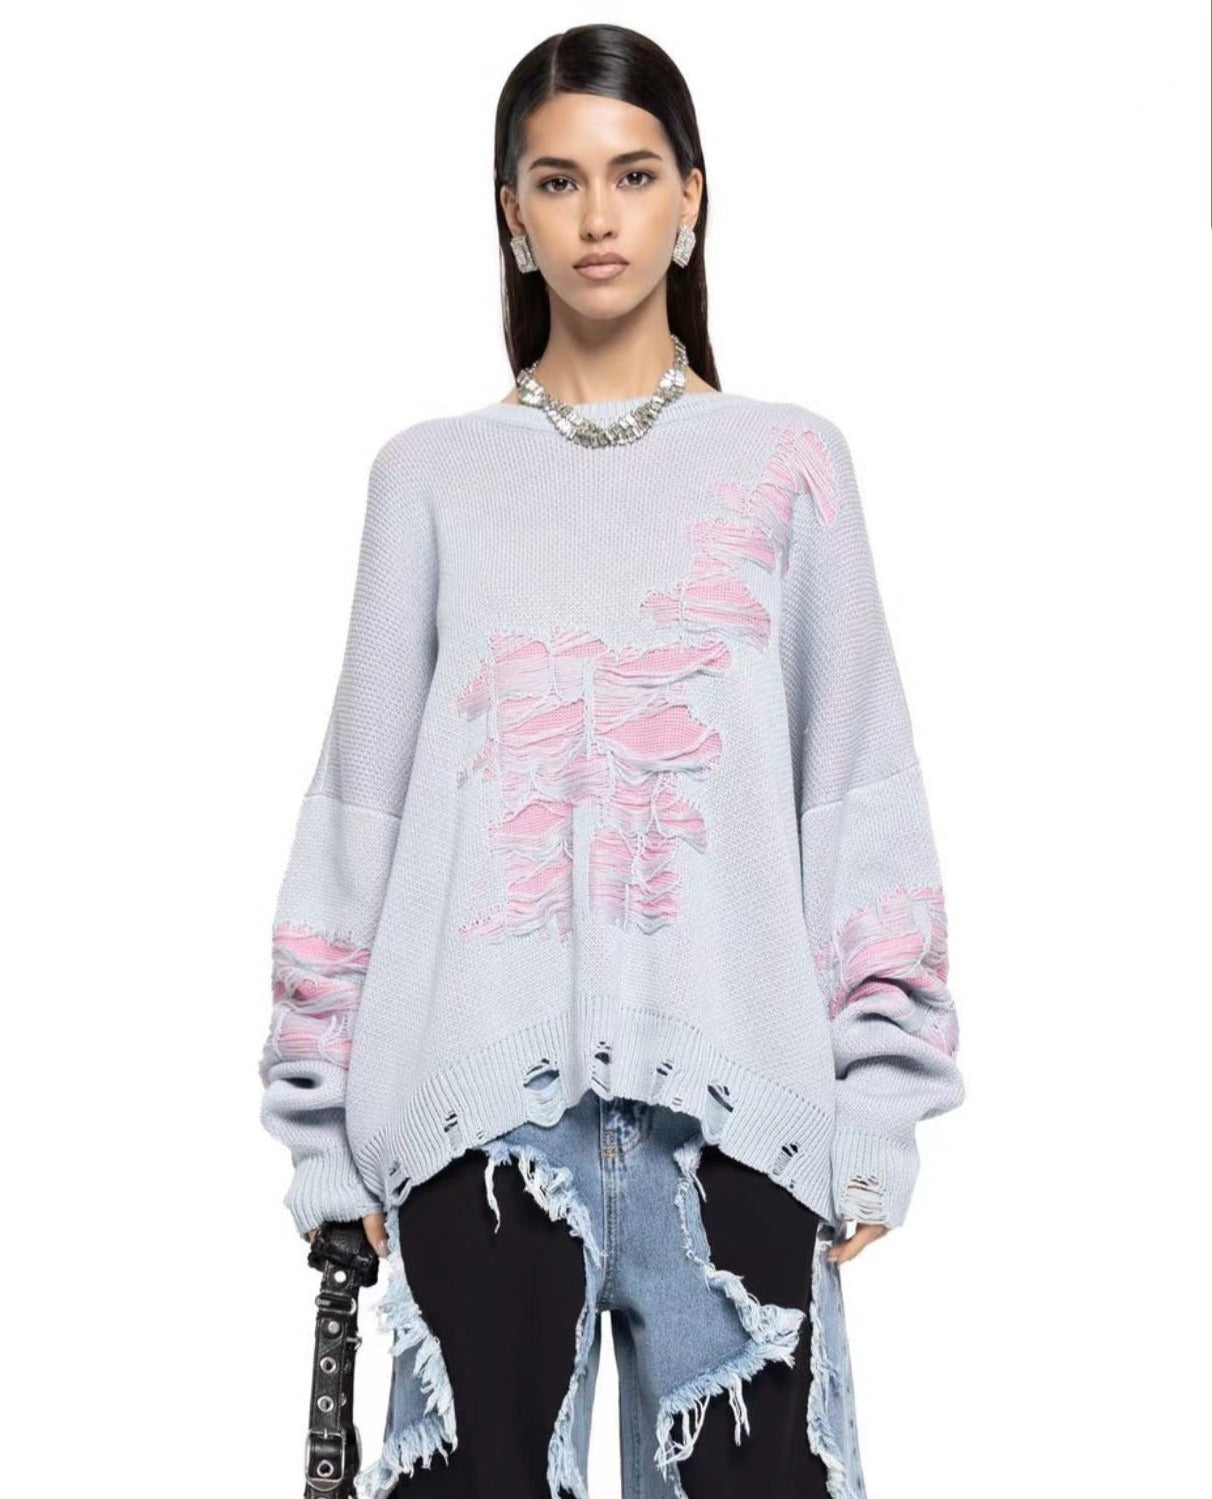 Street style tassel design sweatershirt